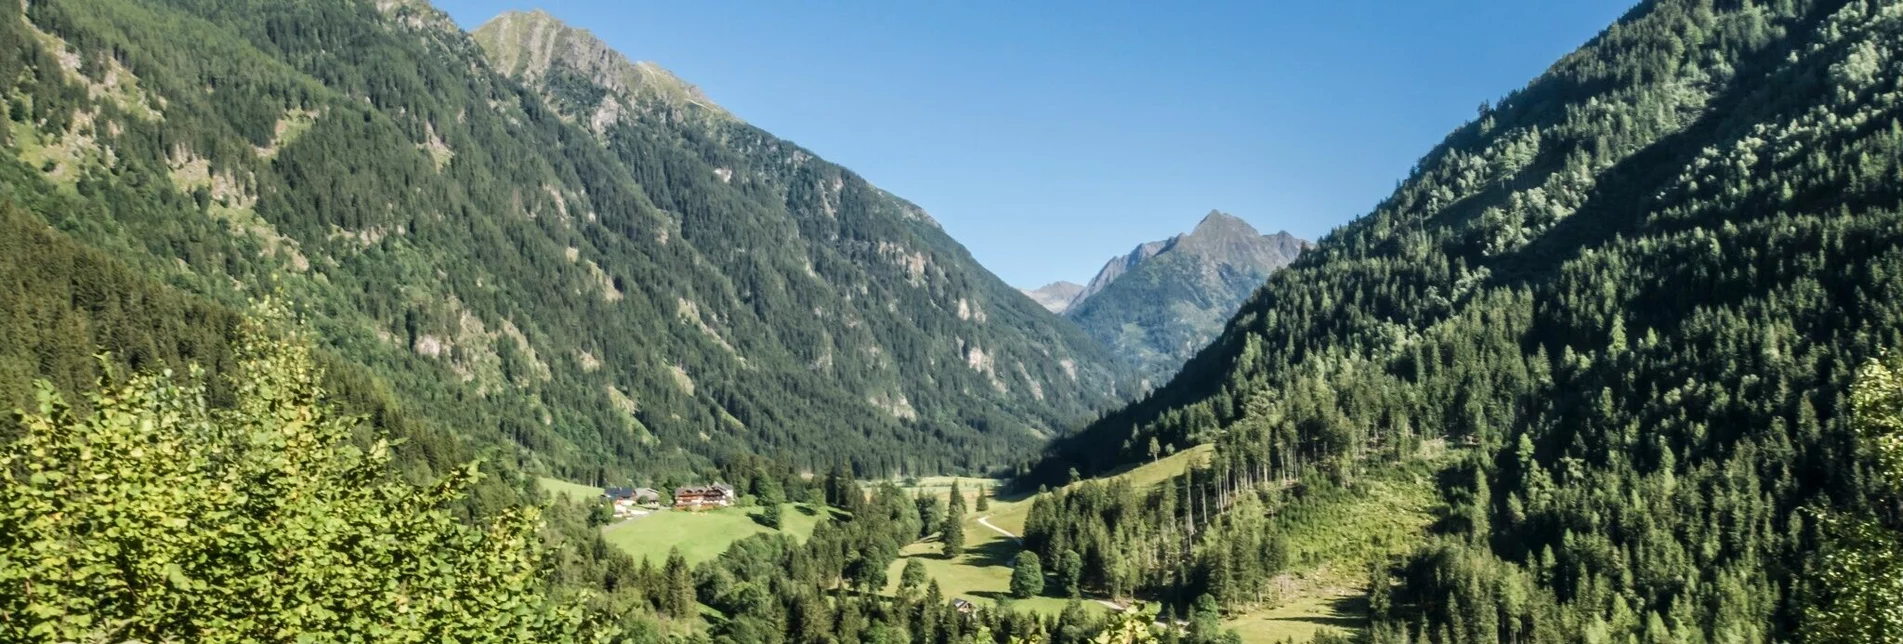 Hiking route Untertal Valley Panoramic Tour - Touren-Impression #1 | © Gerhard Pilz - www.gpic.at